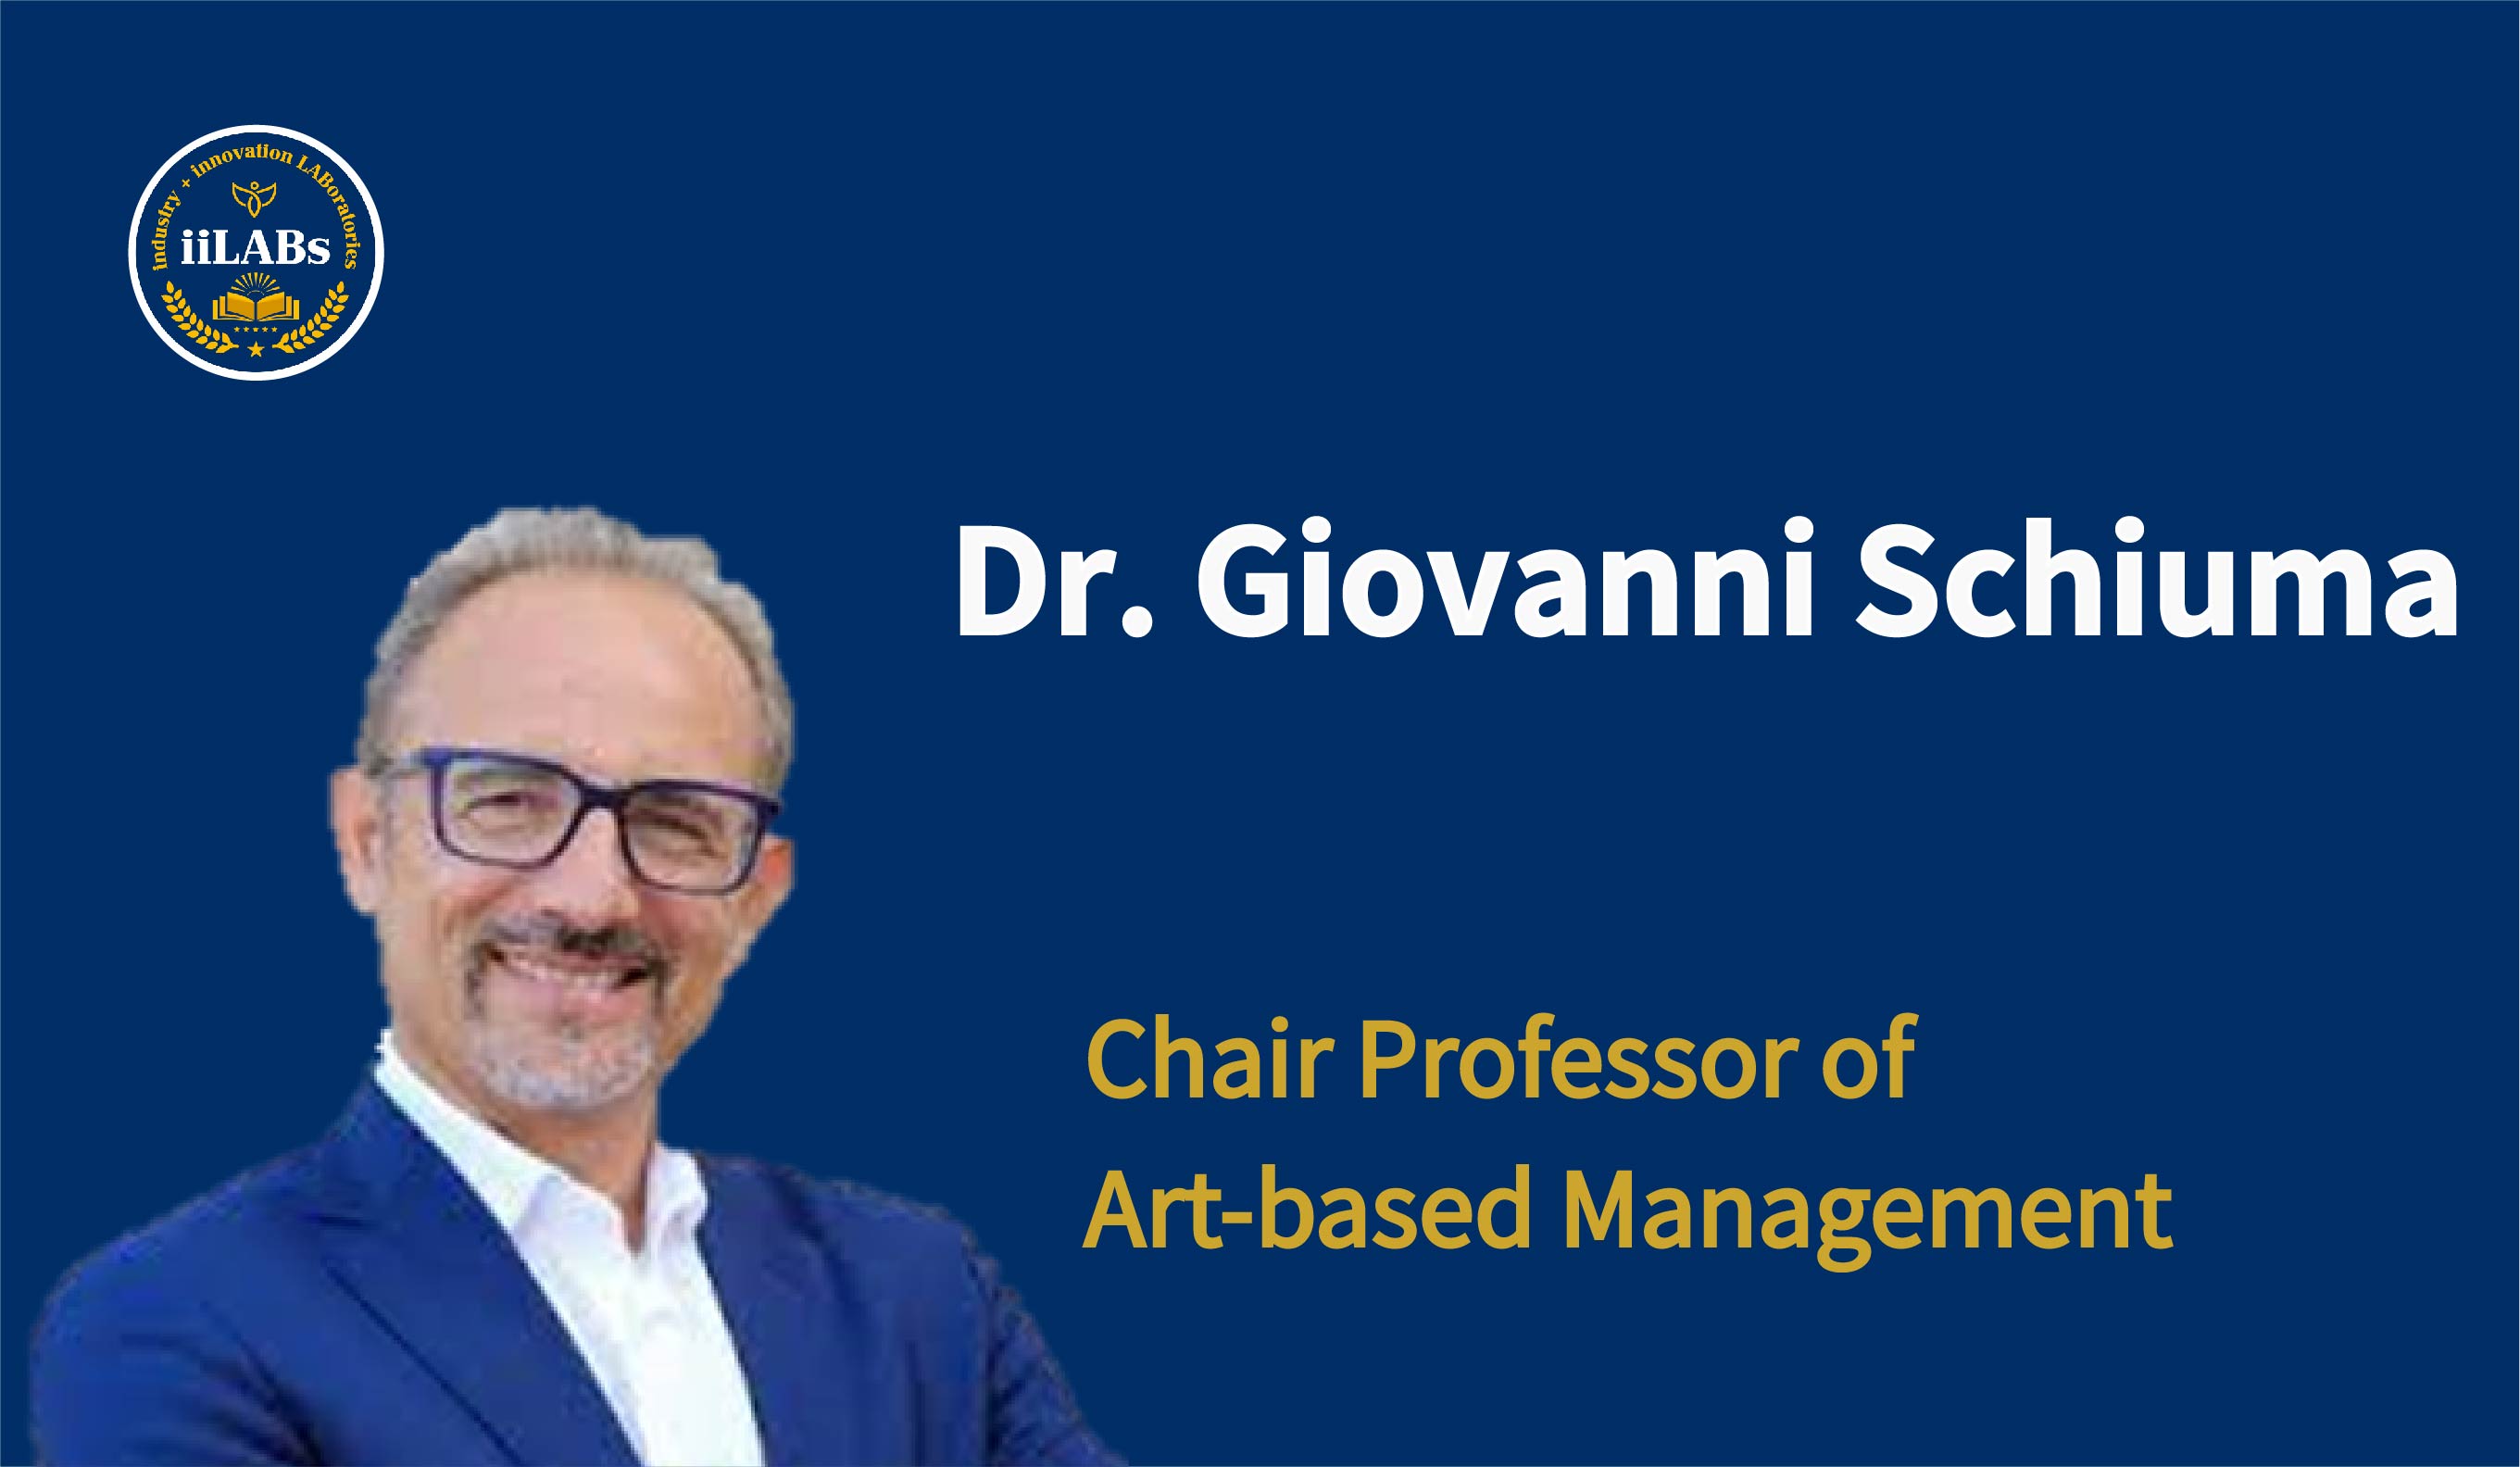 Dr. Giovanni Schiuma, Chair Professor of Art-based Management